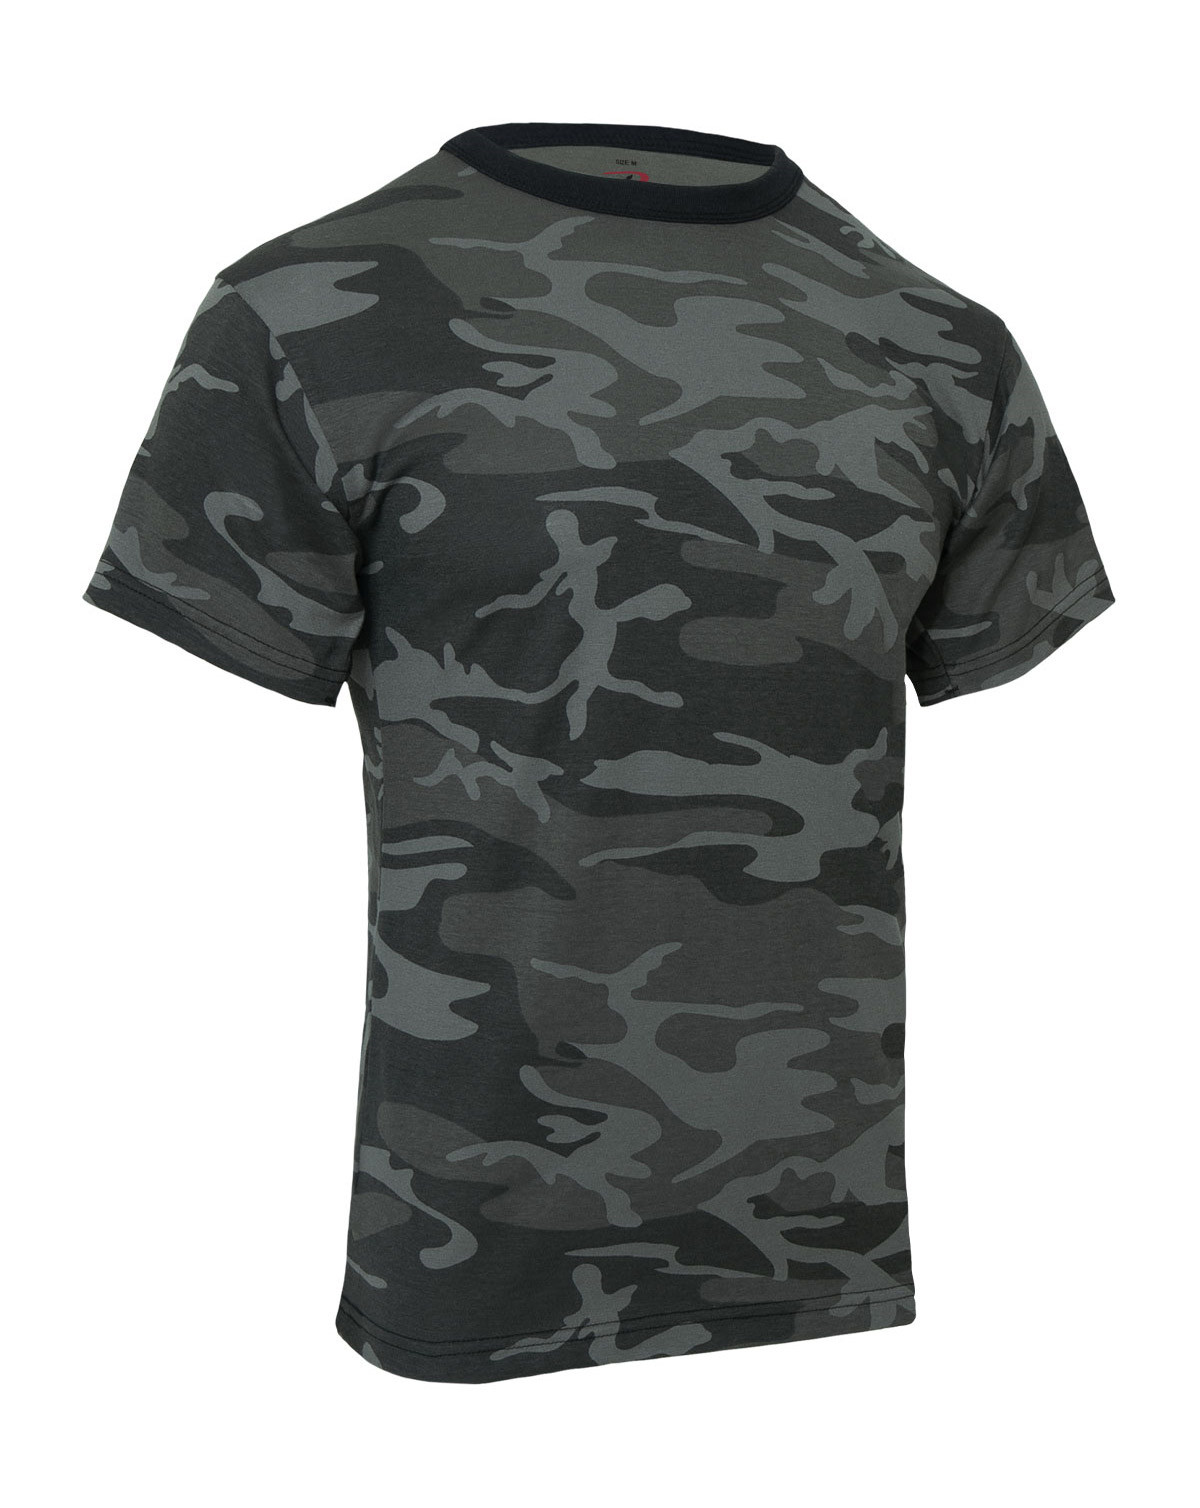 Rothco T-shirt - Mange Camouflager (Black Camo, 2XL)